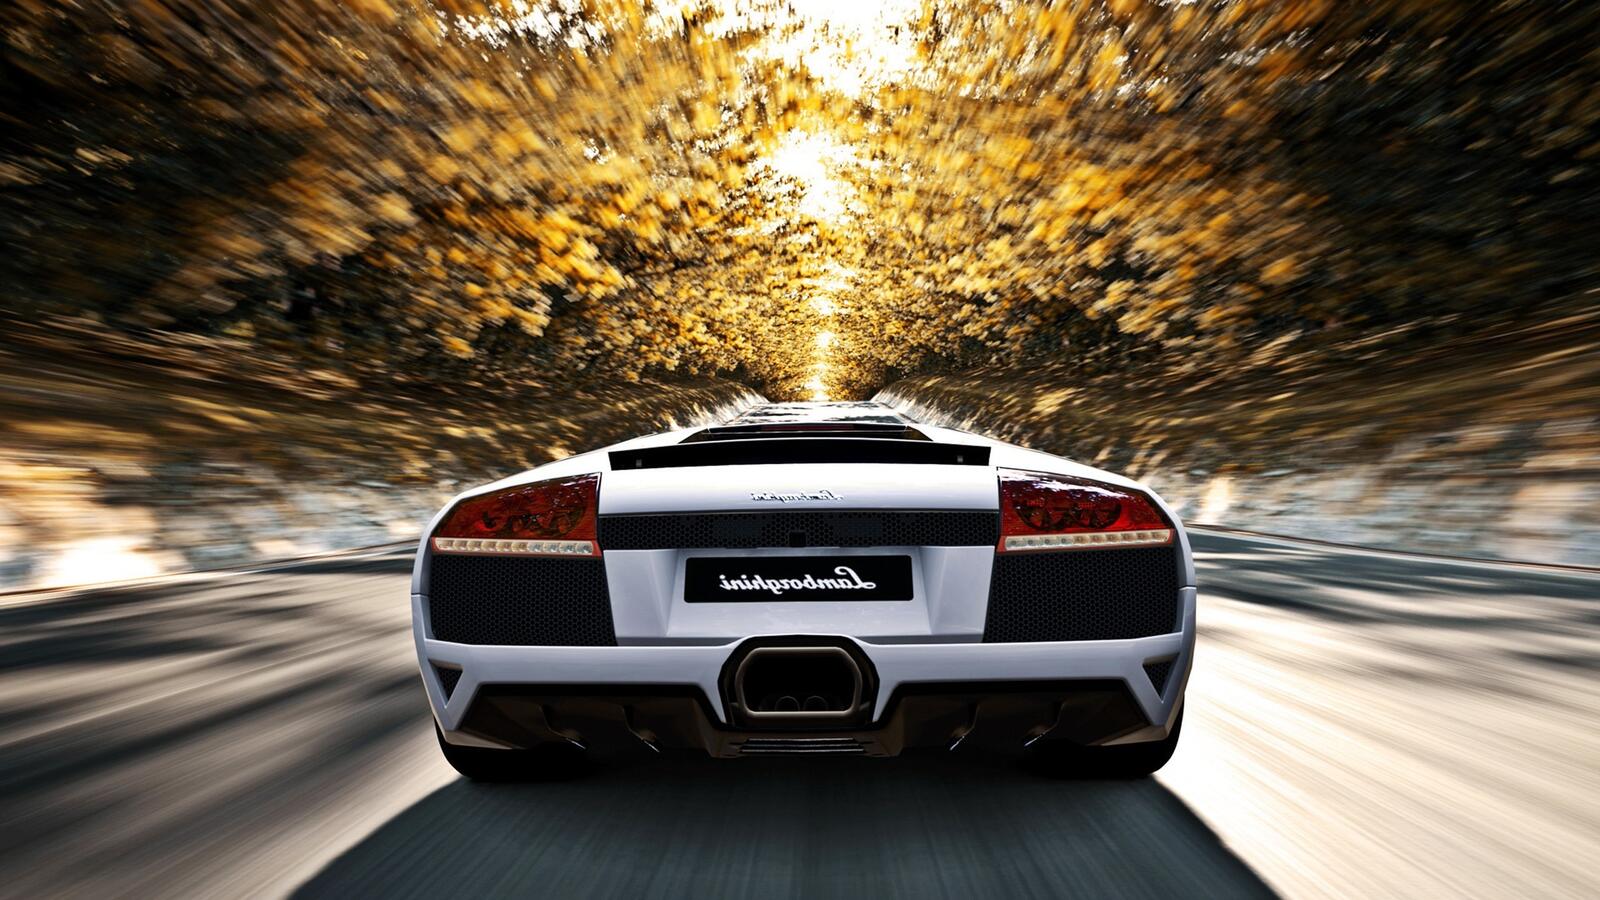 Free photo White Lamborghini rear view